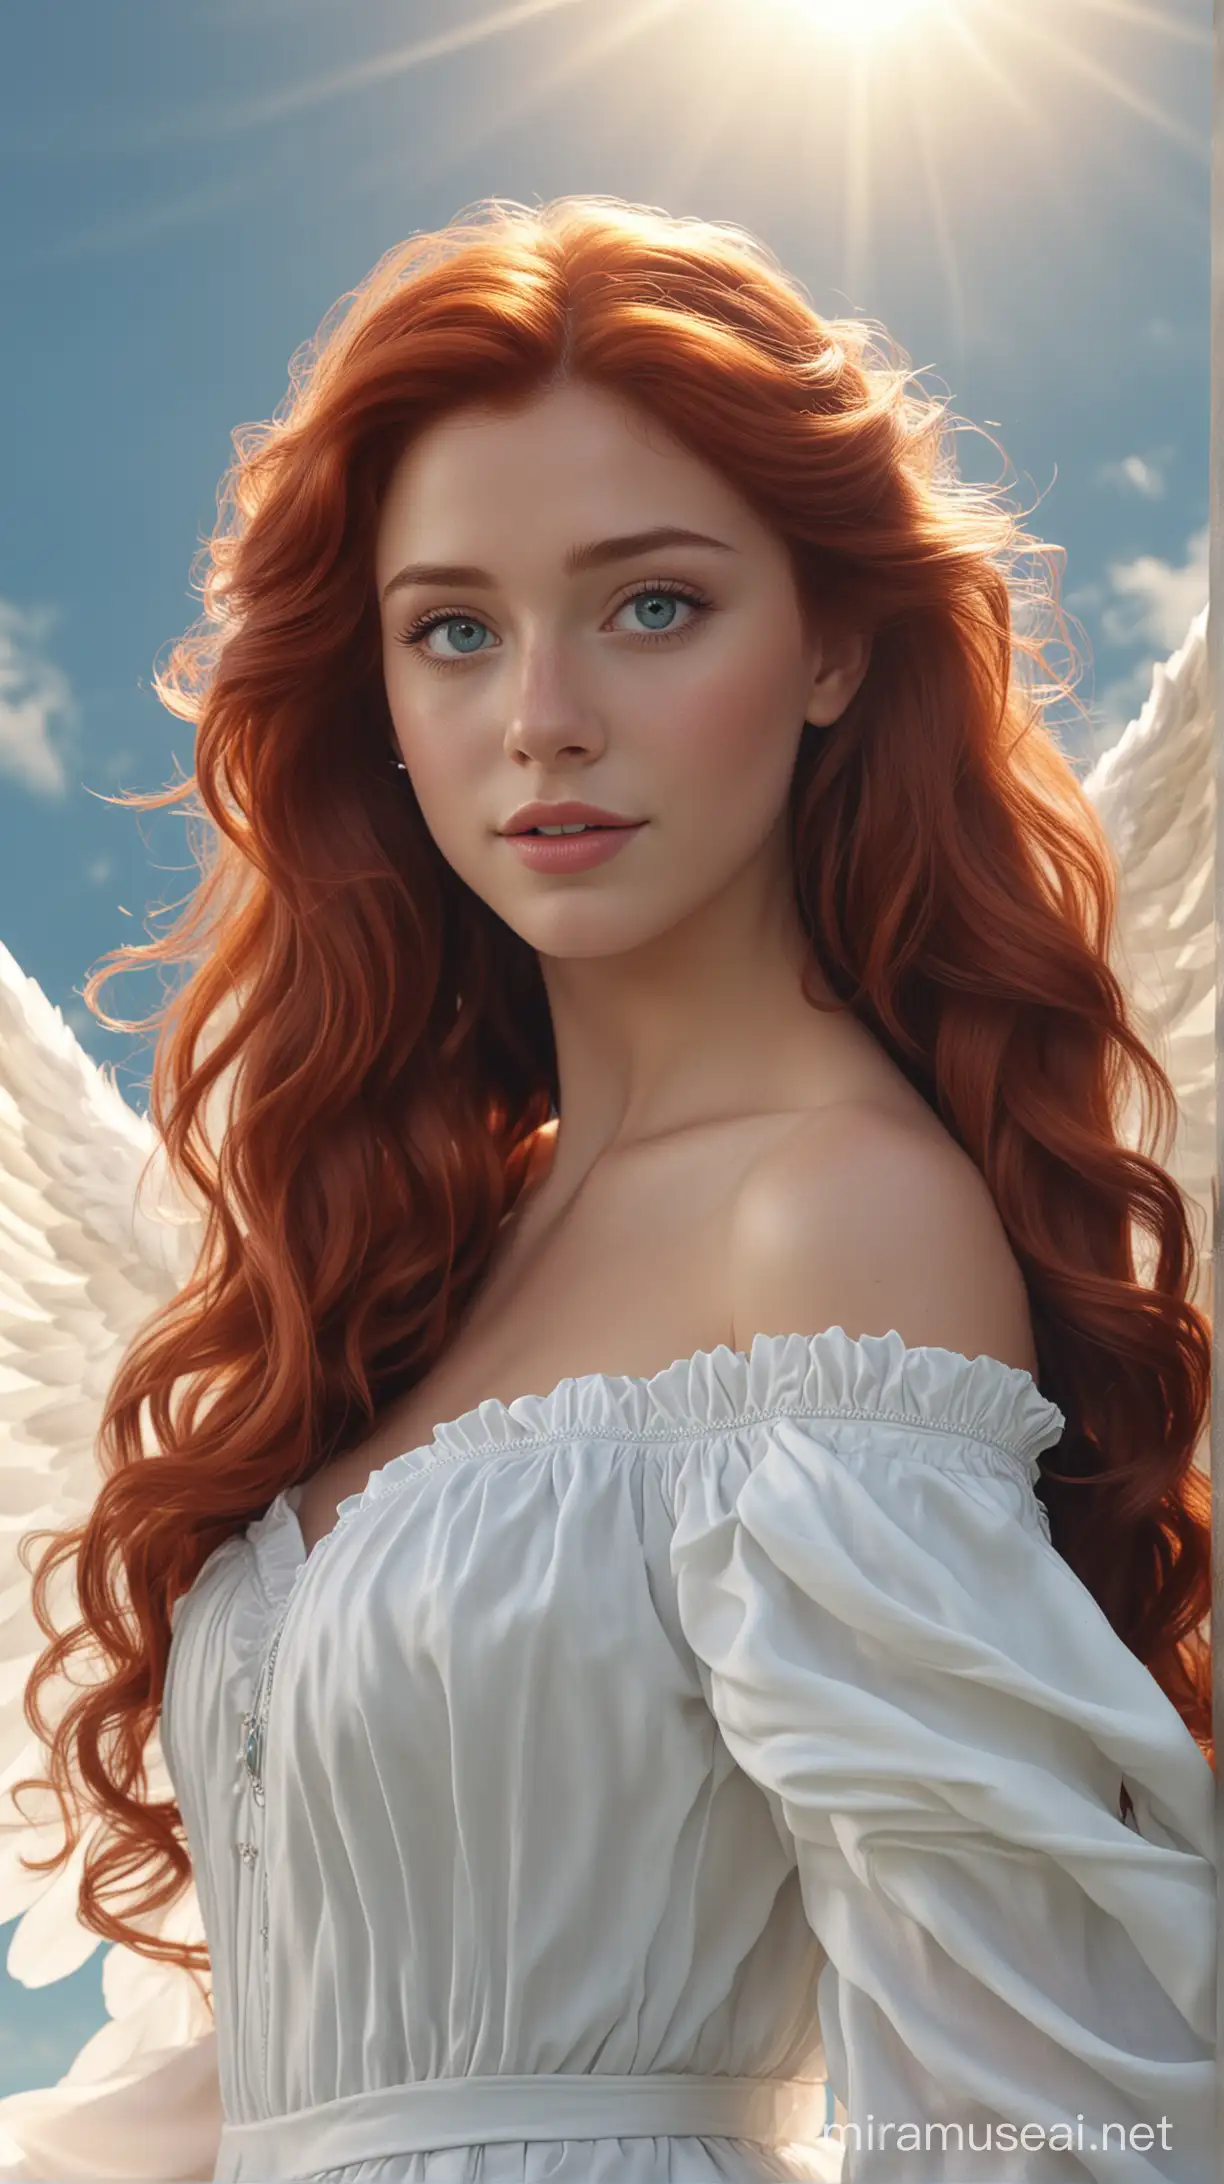 Celestial Ariel Danish Disney Princess with Angelic Wings in UltraRealistic Sky Scene